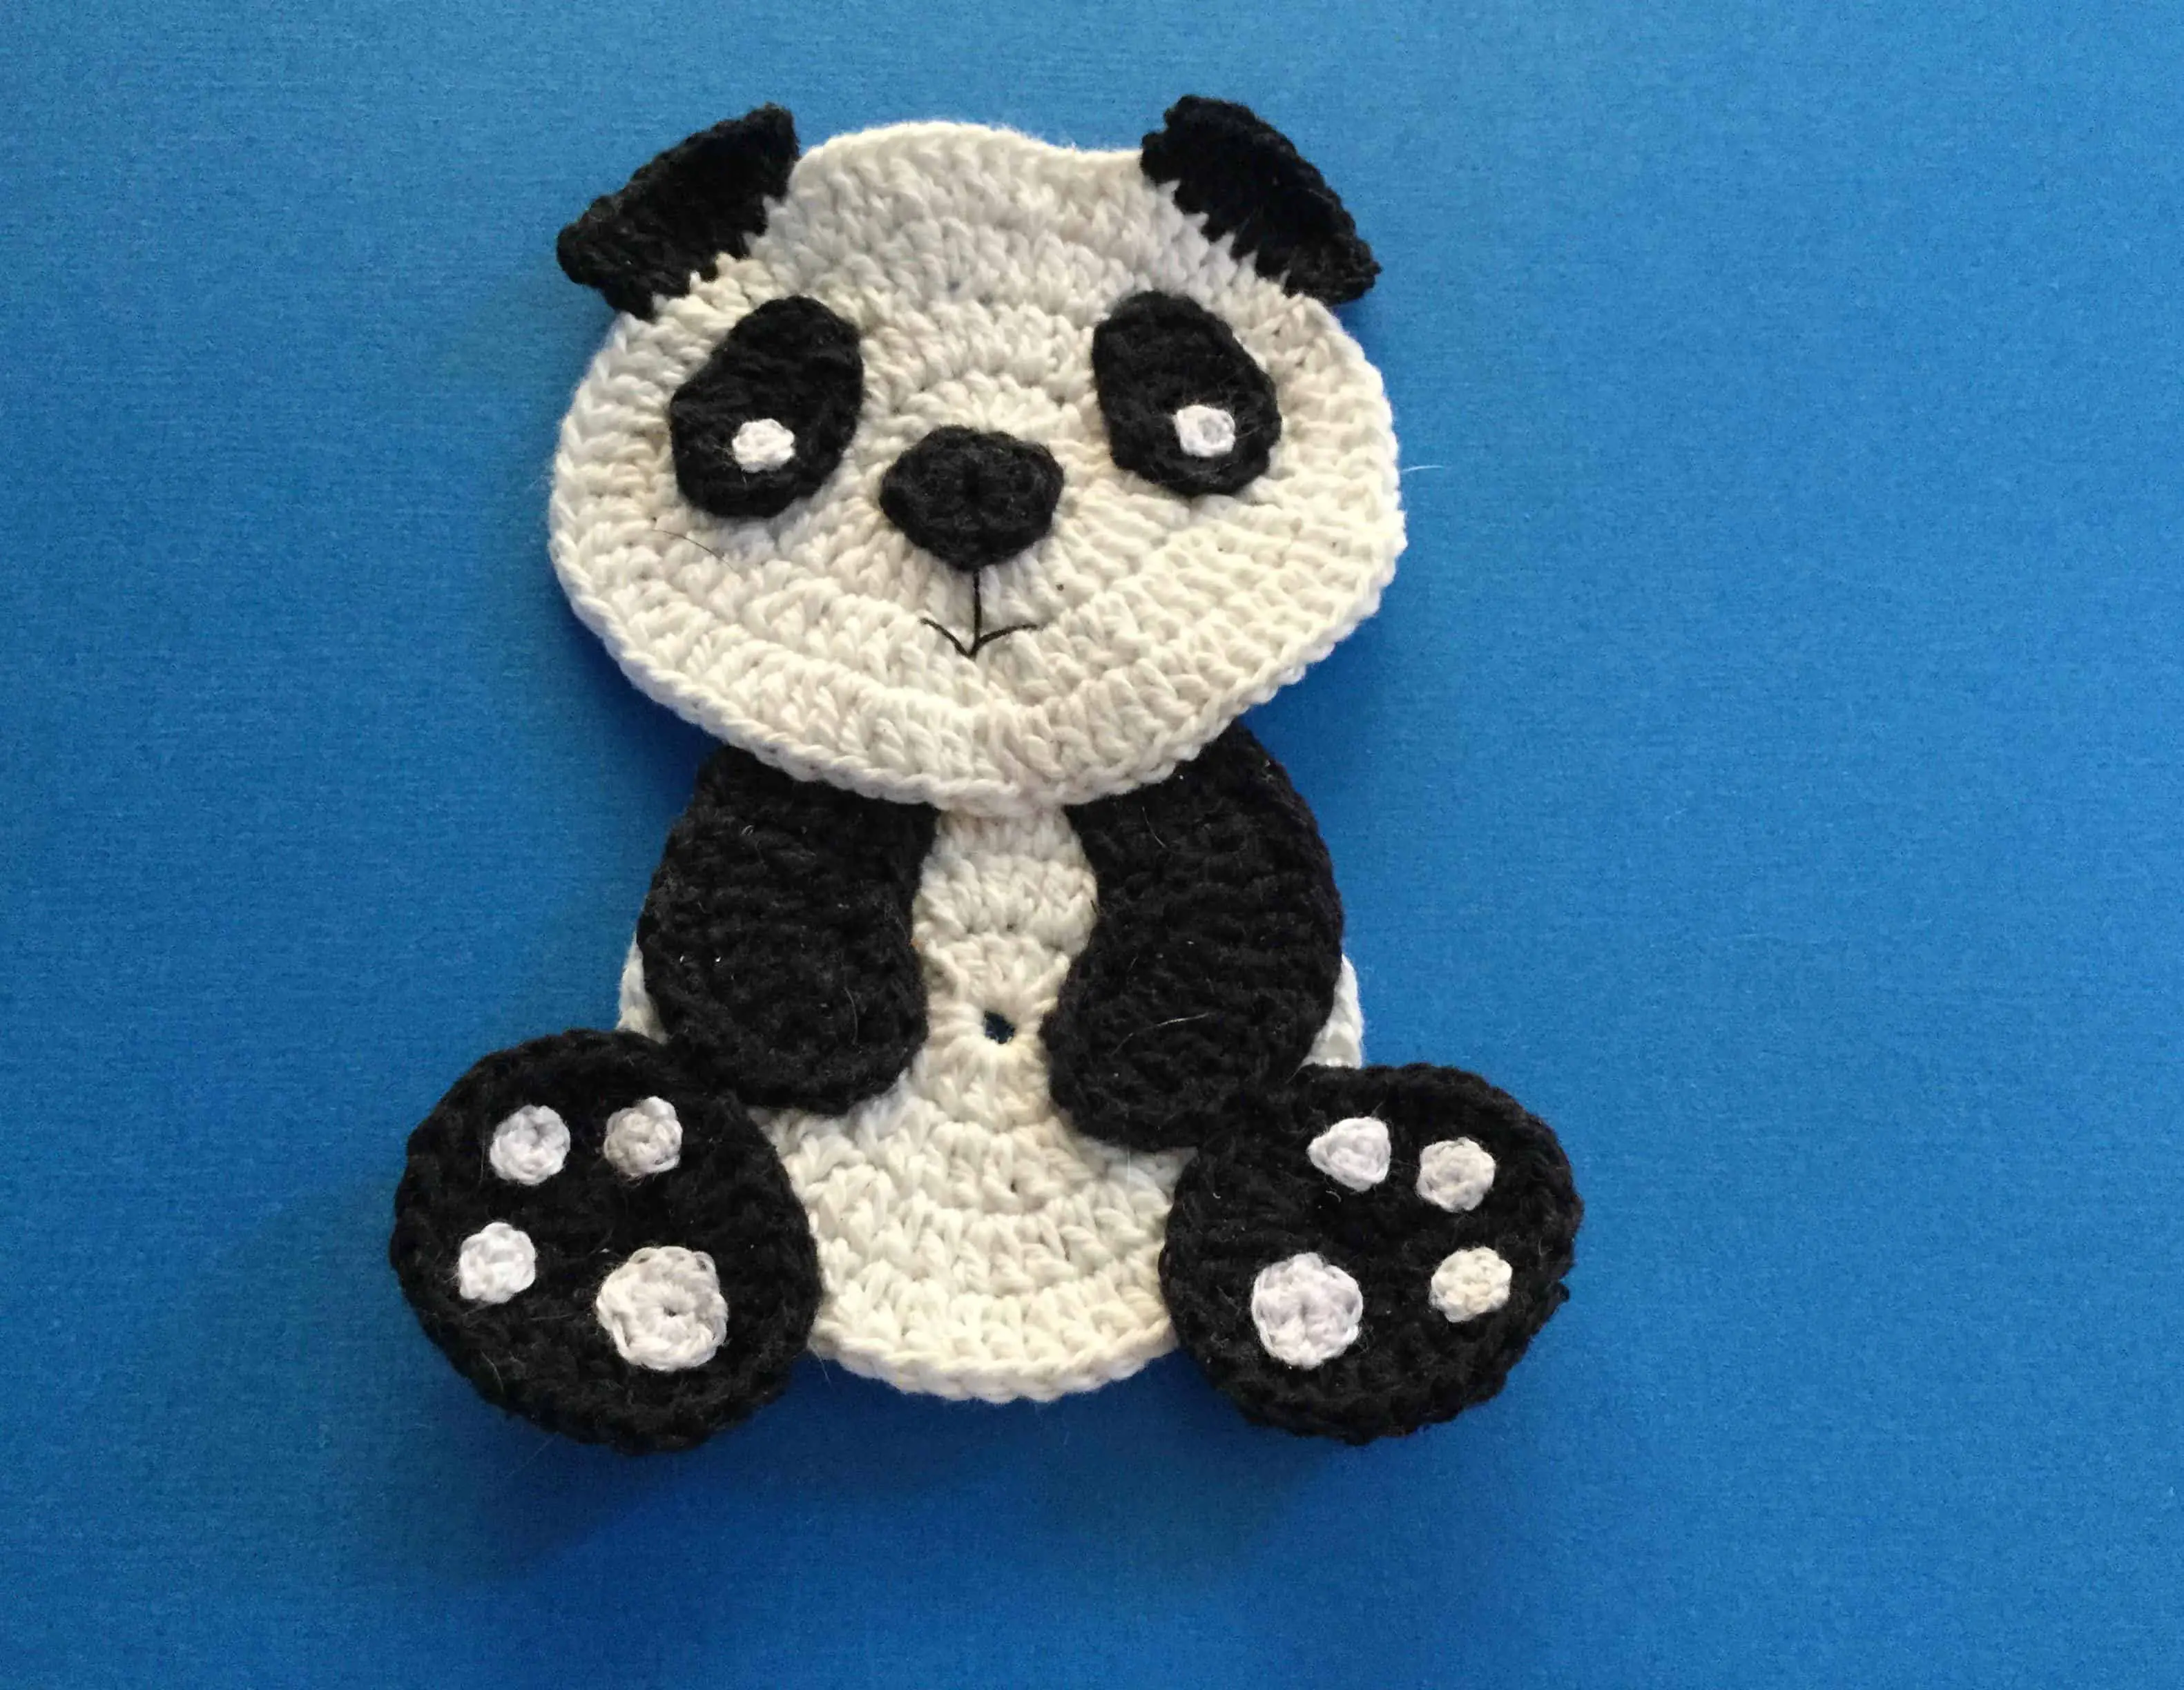 Finished crochet panda landscape